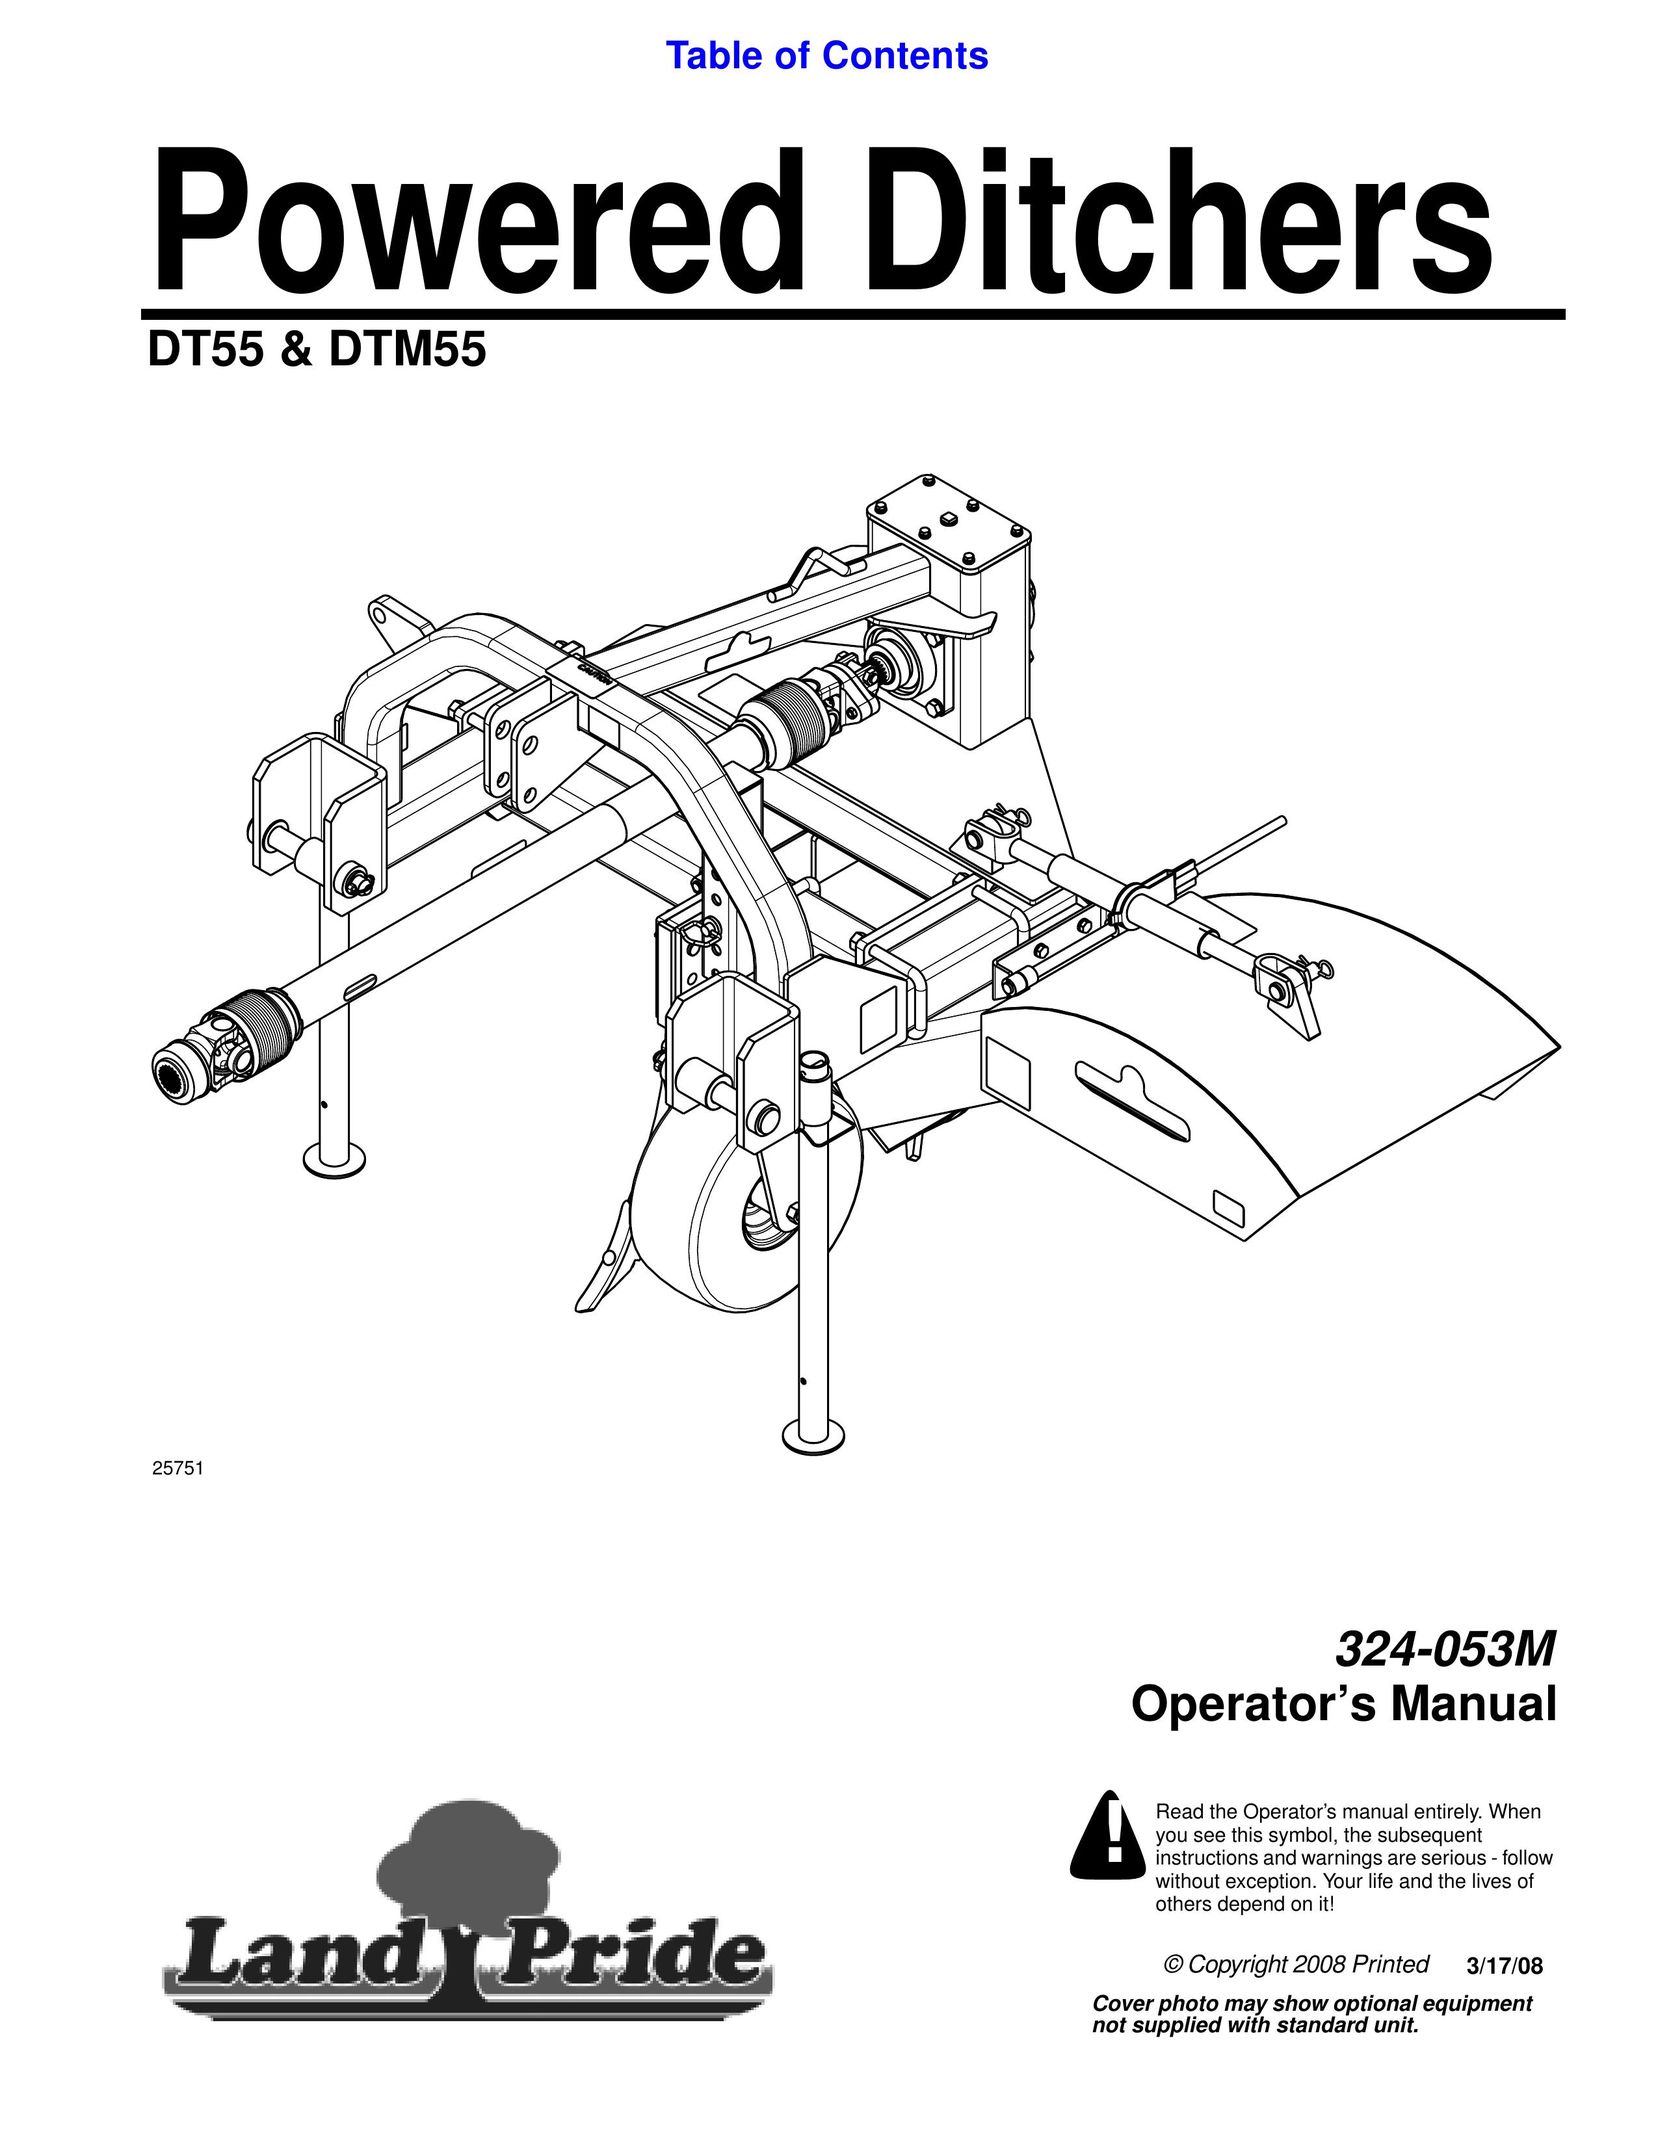 Land Pride DTM55 Power Screwdriver User Manual